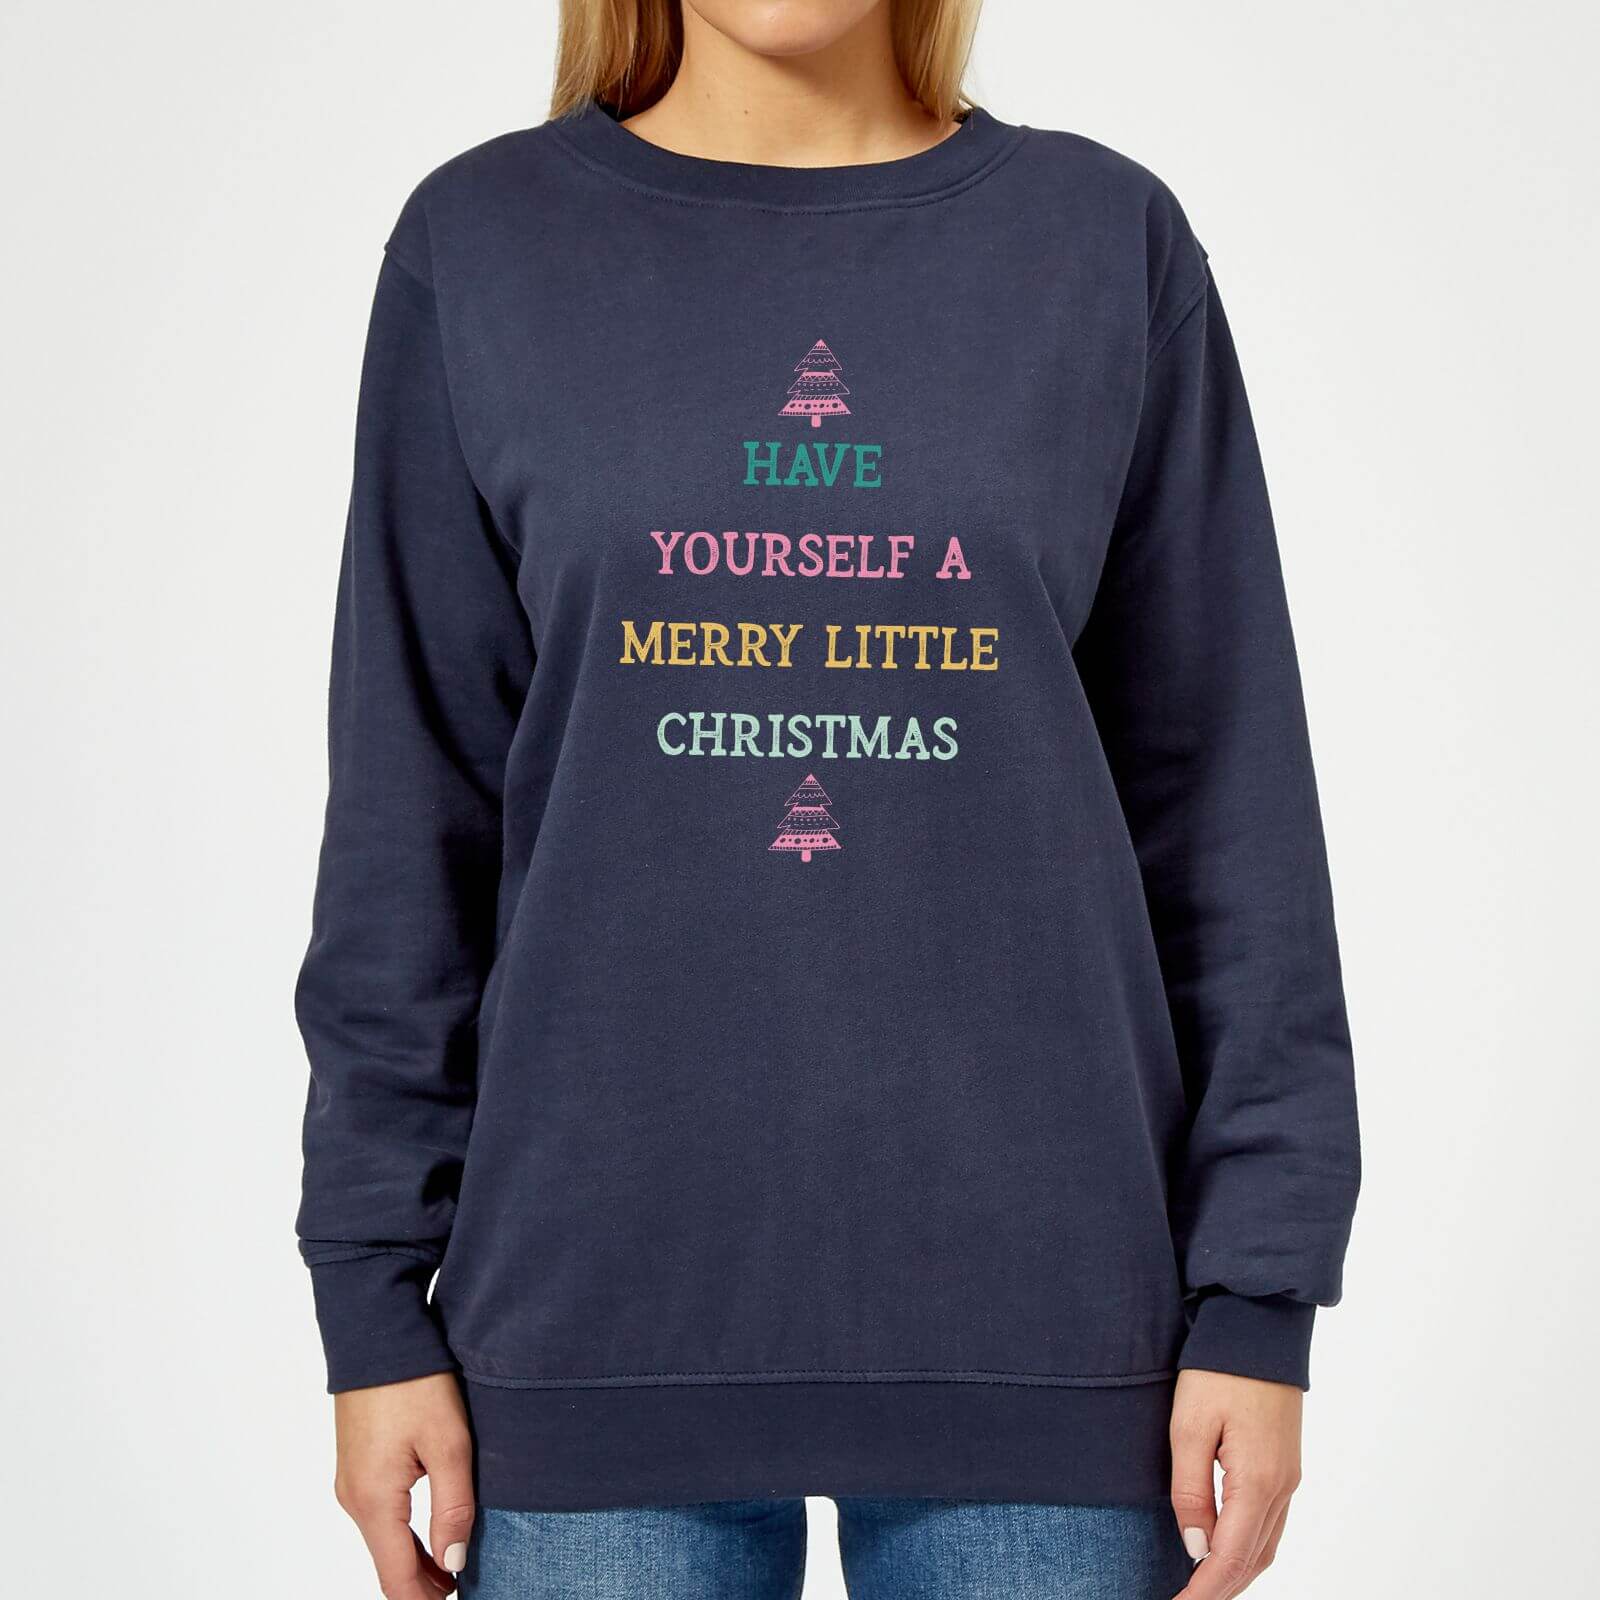 Have Yourself A Merry Little Christmas Women's Christmas Sweatshirt - Navy - XS